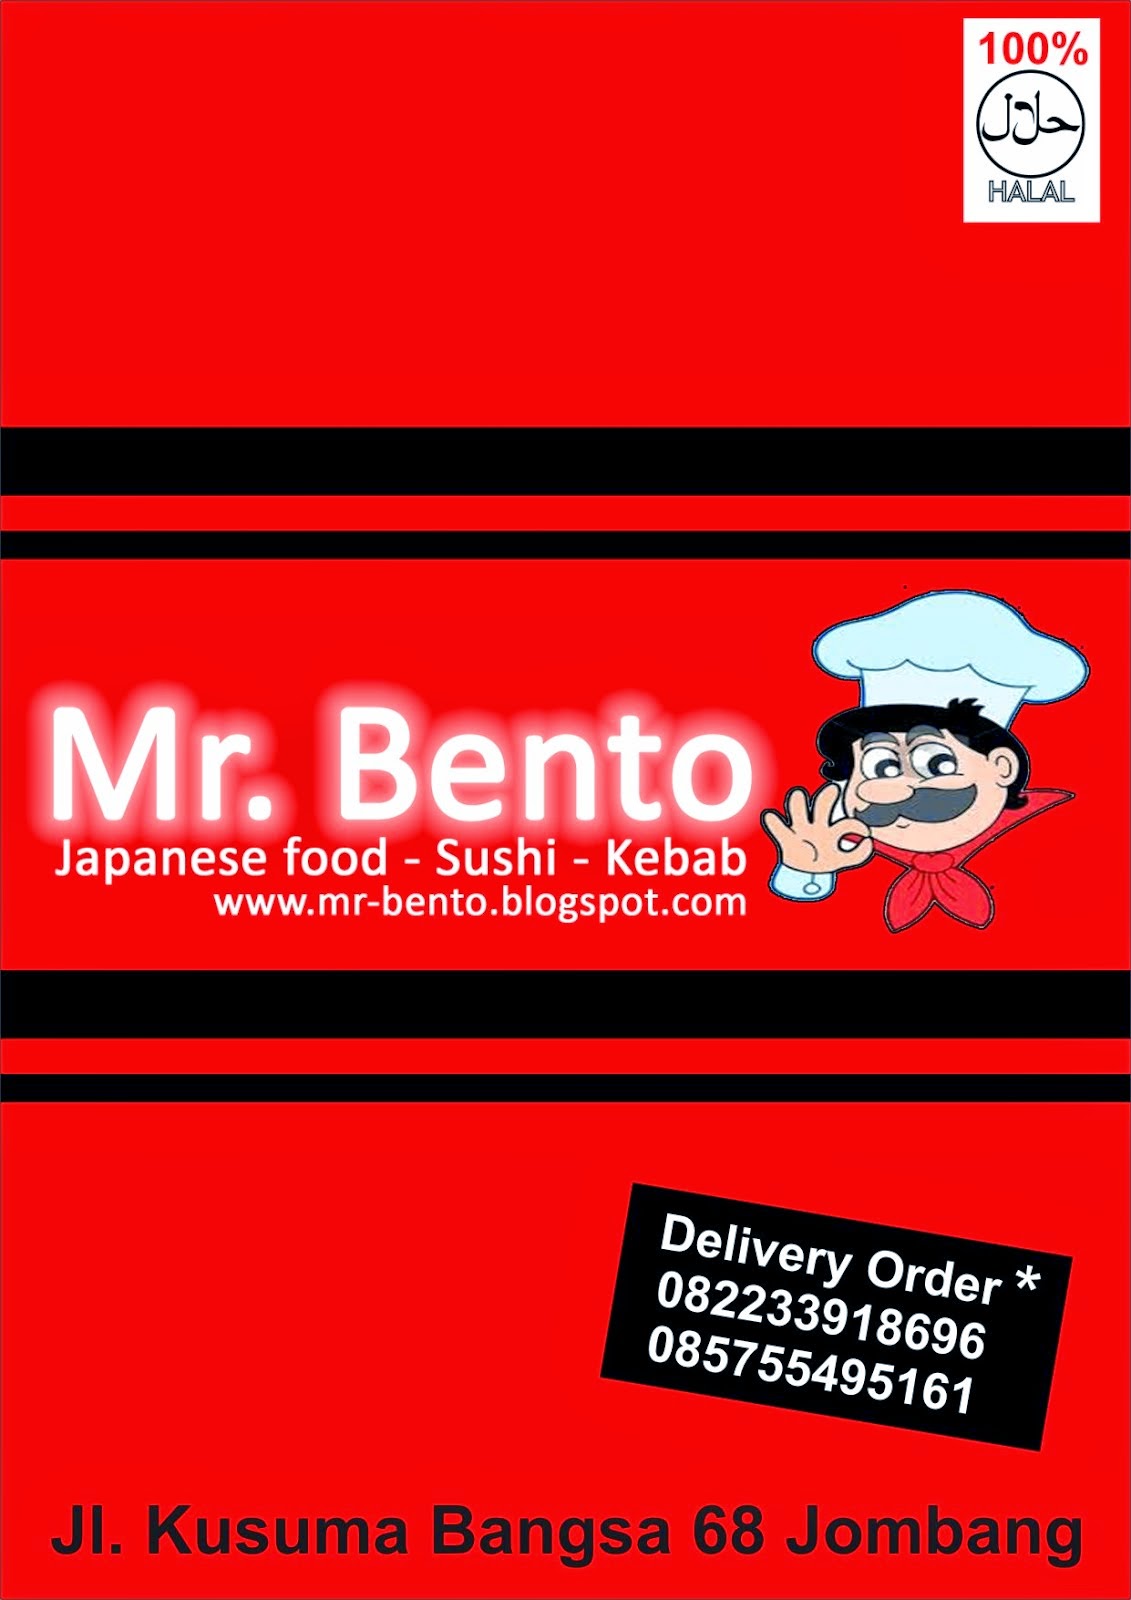 Mr. Bento